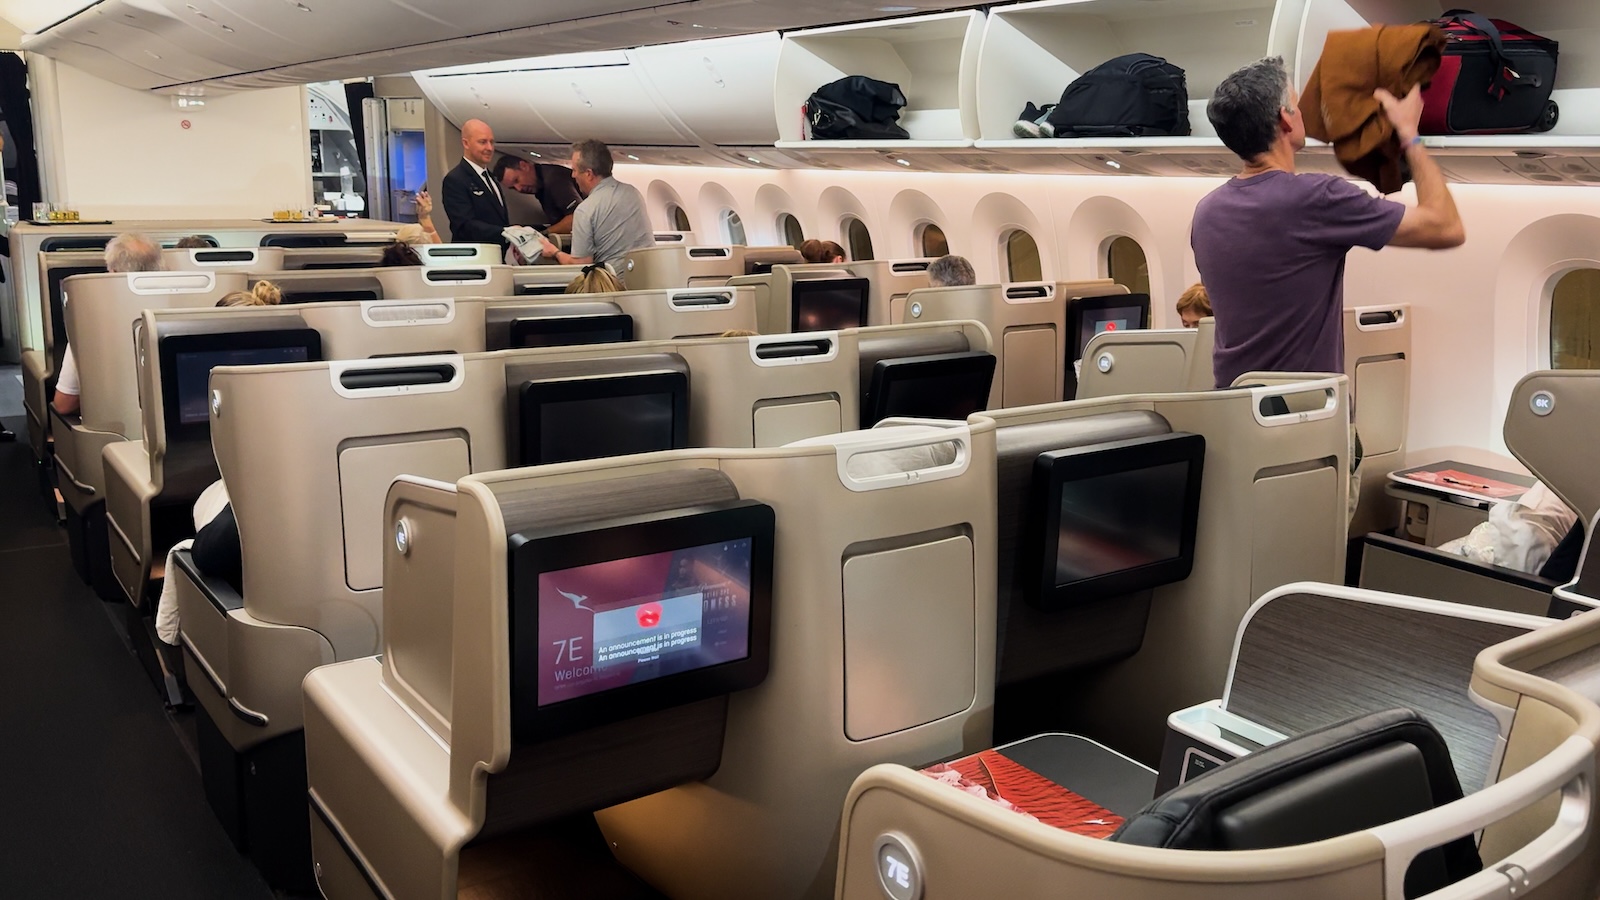 Qantas 787 Business Class cabin from USA